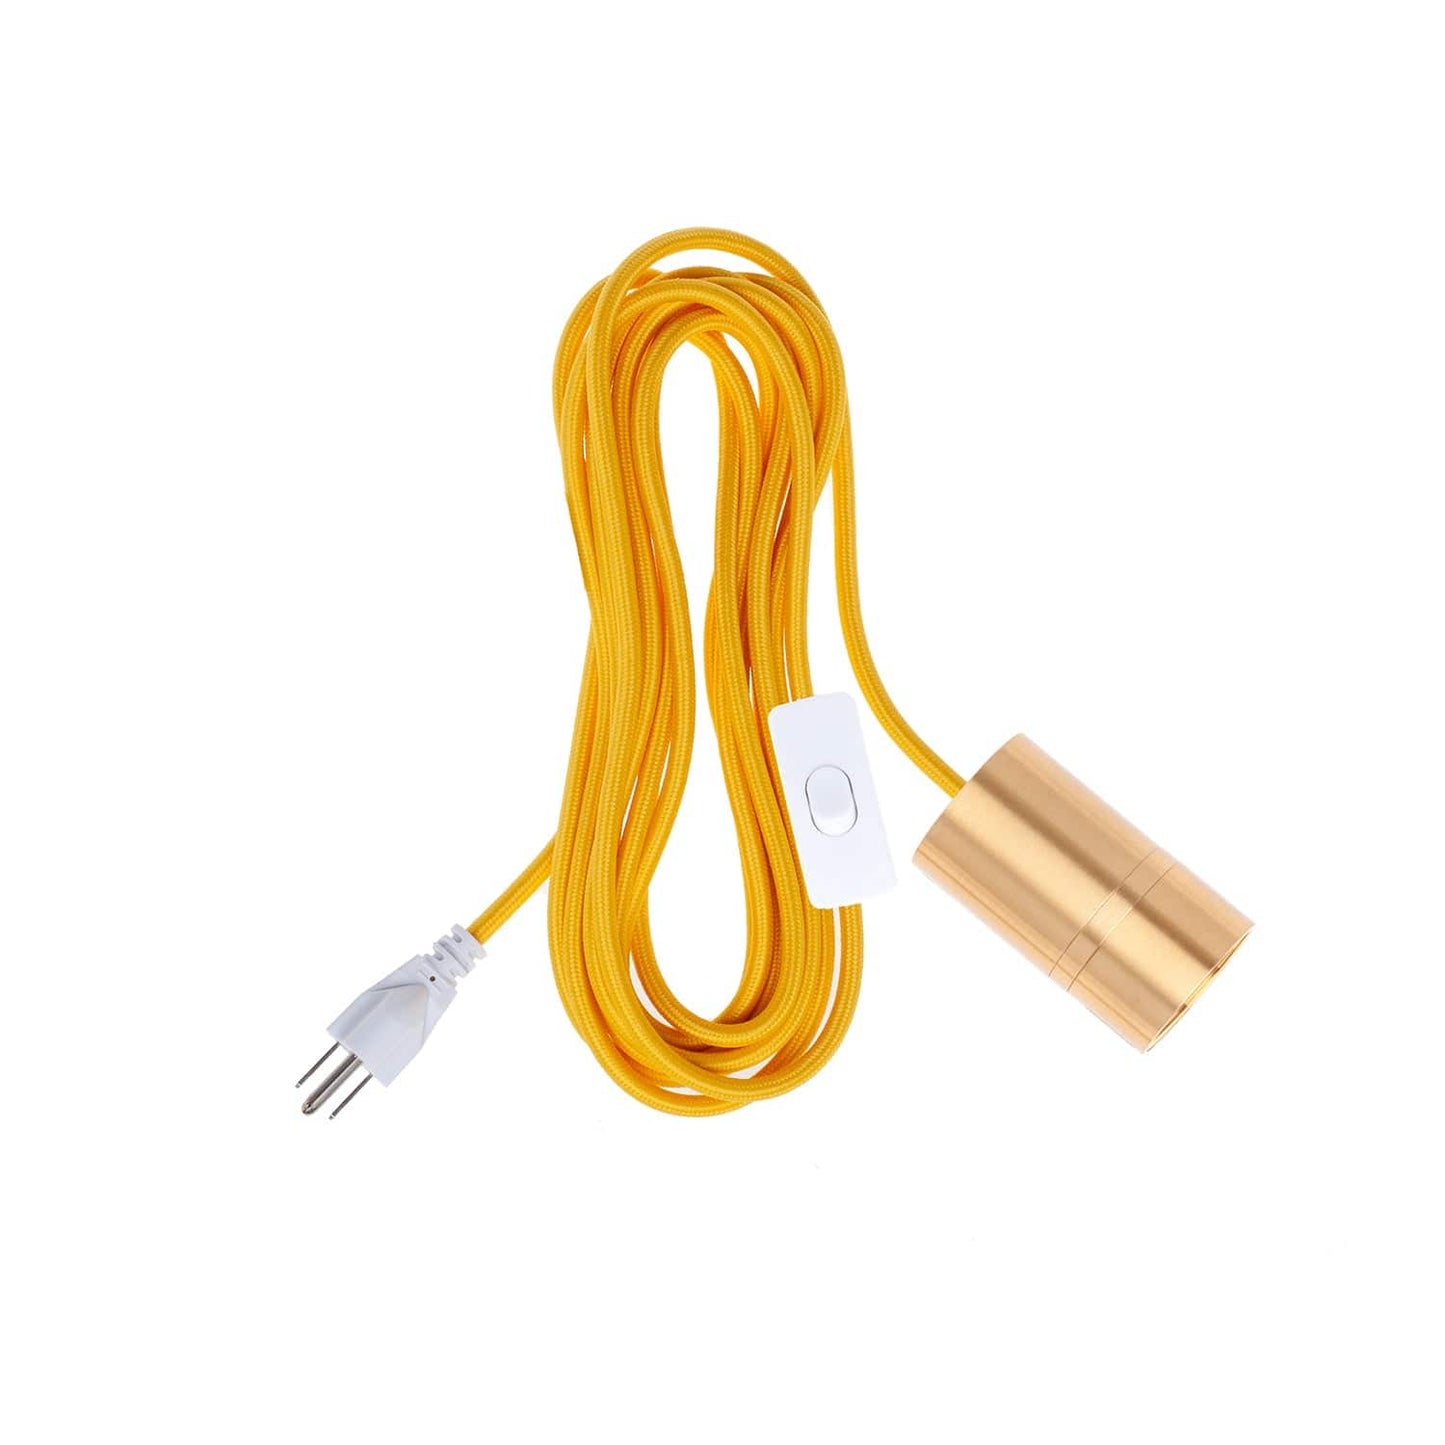 AiO Satin Brass Chroma Plug-In Cord Set